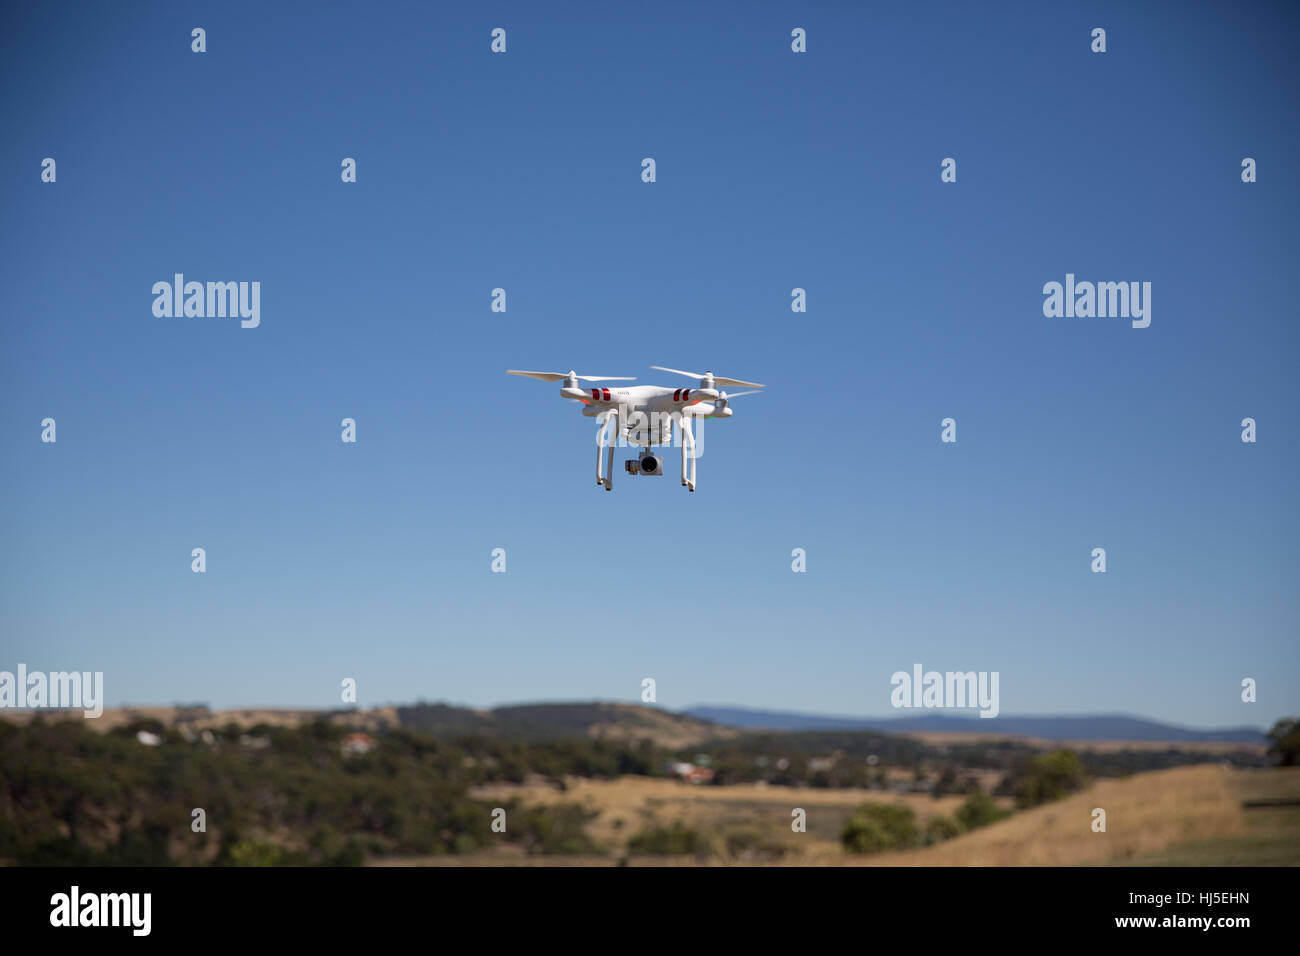 Vehículo aéreo no tripulado (UAV) o zumbido, segura volando en un campo. Foto de stock